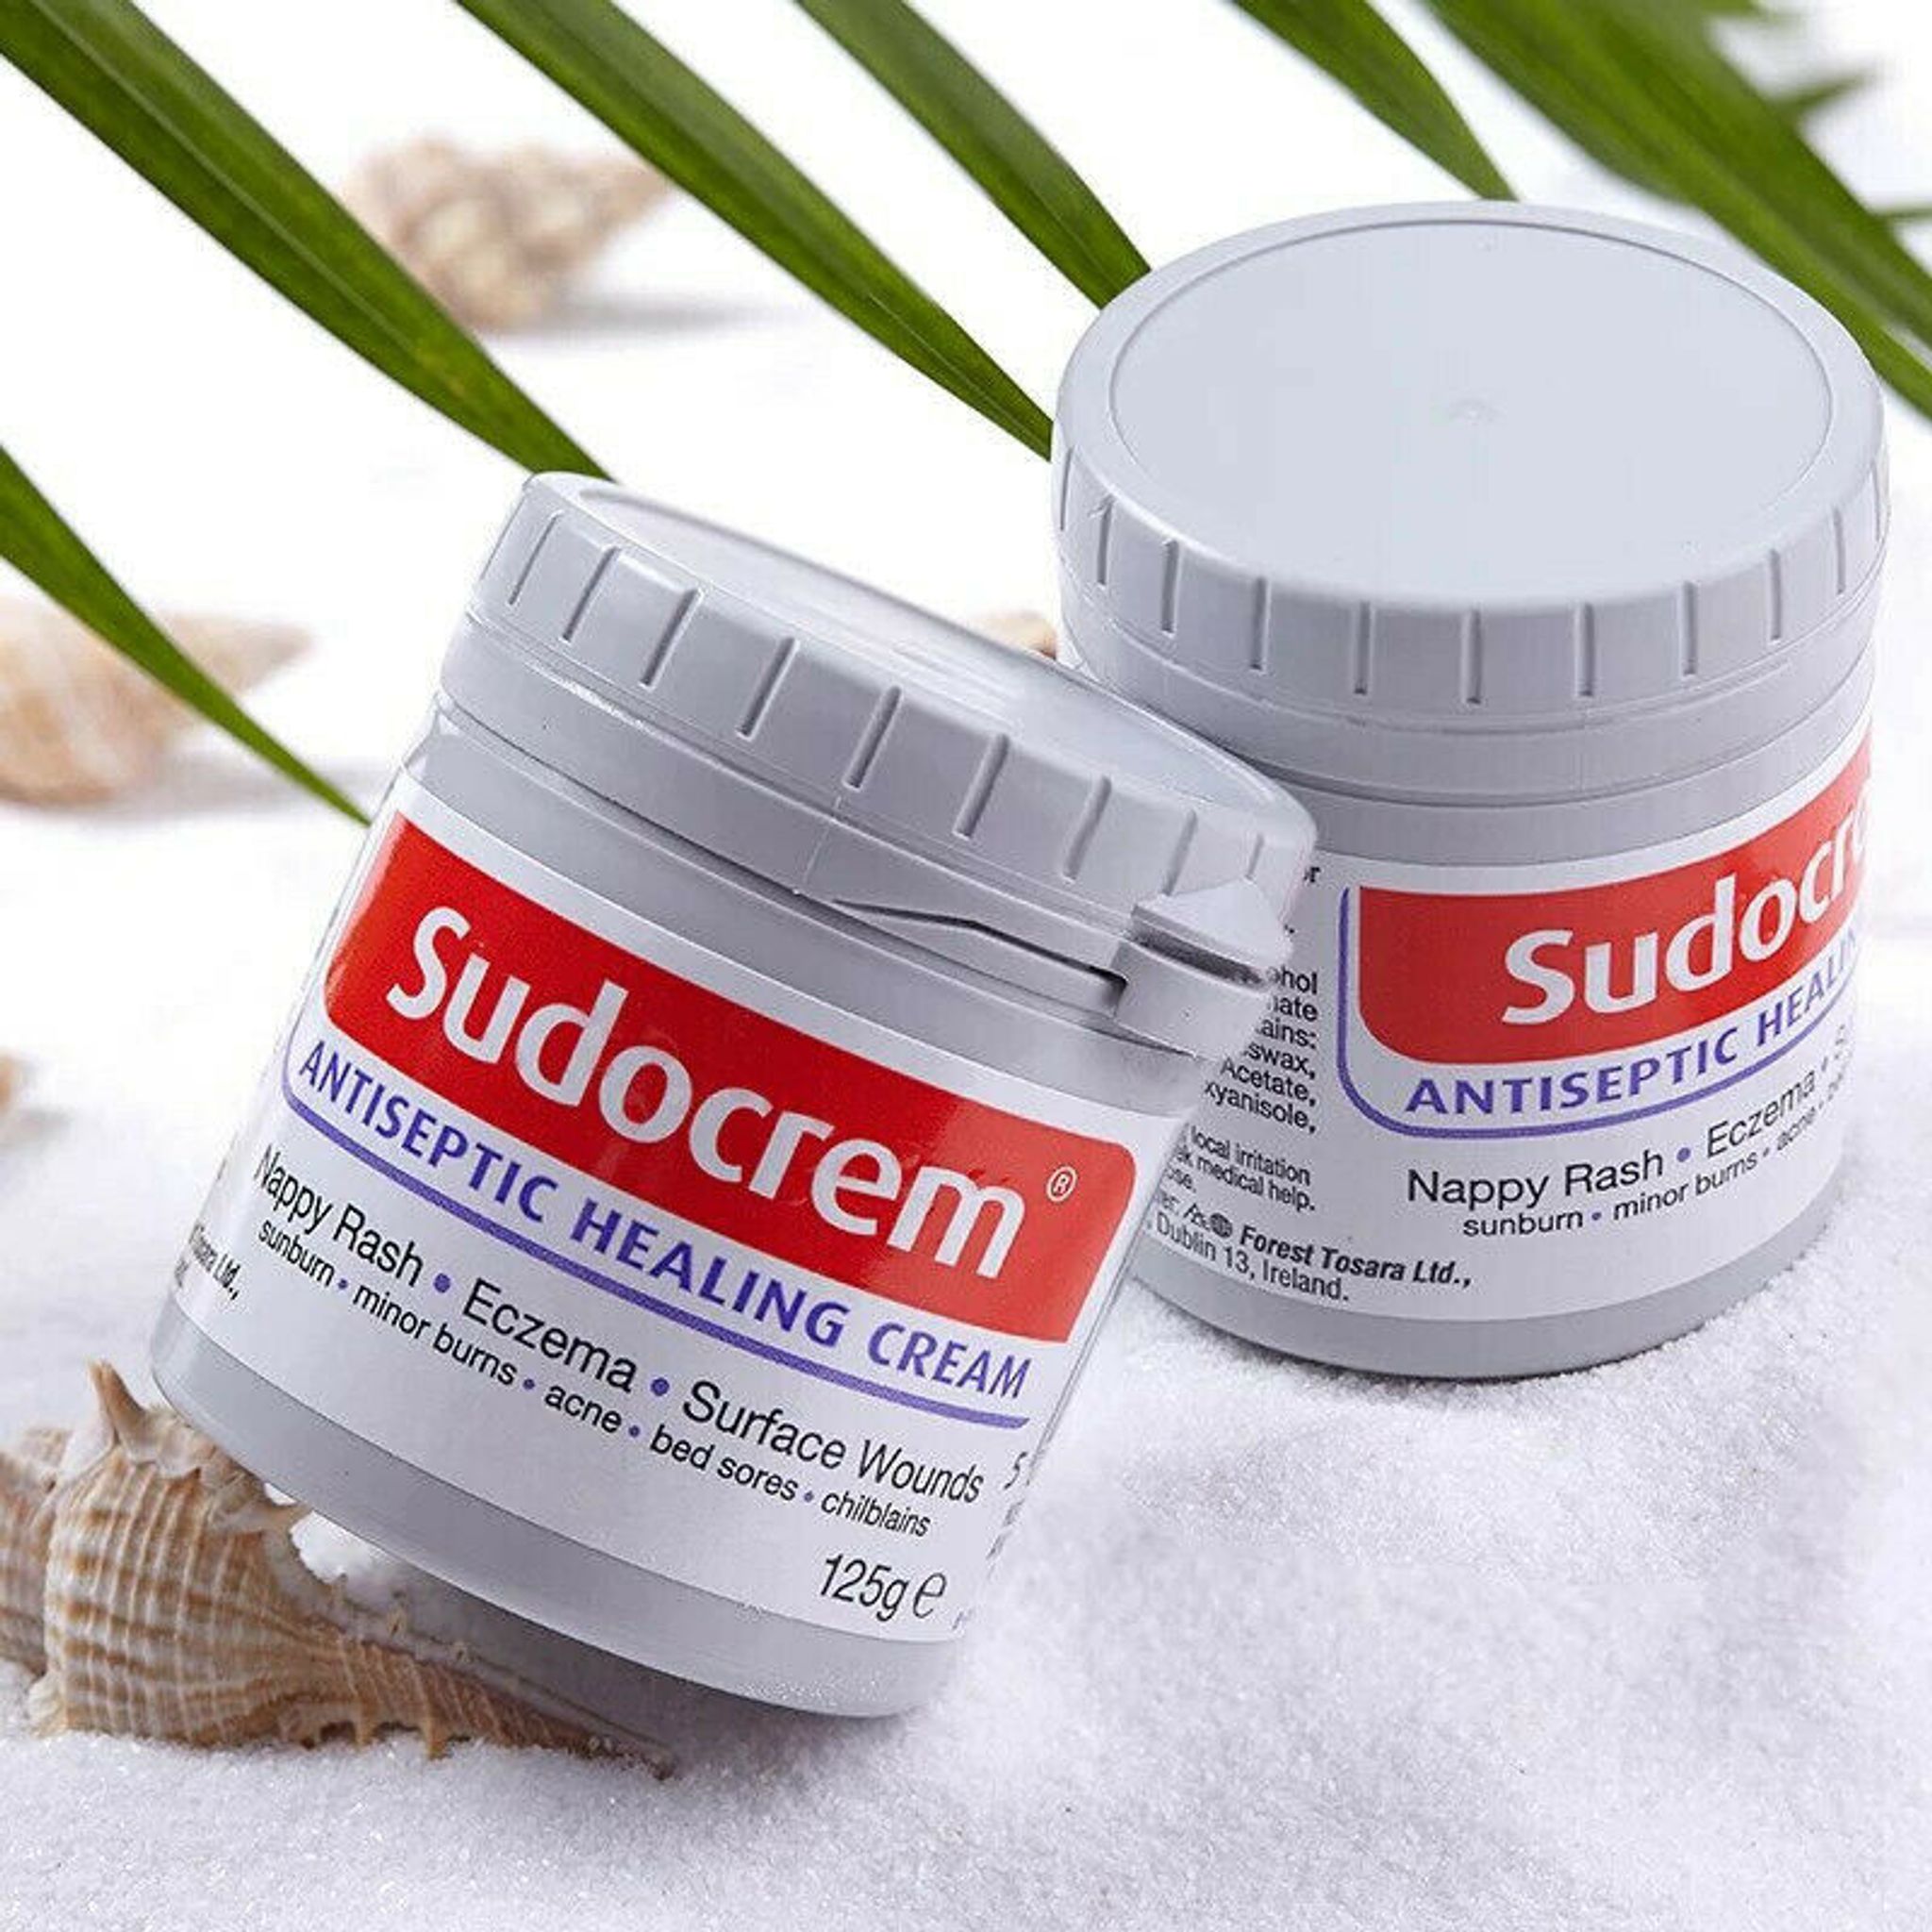 Buy Sudocrem Antiseptic Healing Cream 125g online